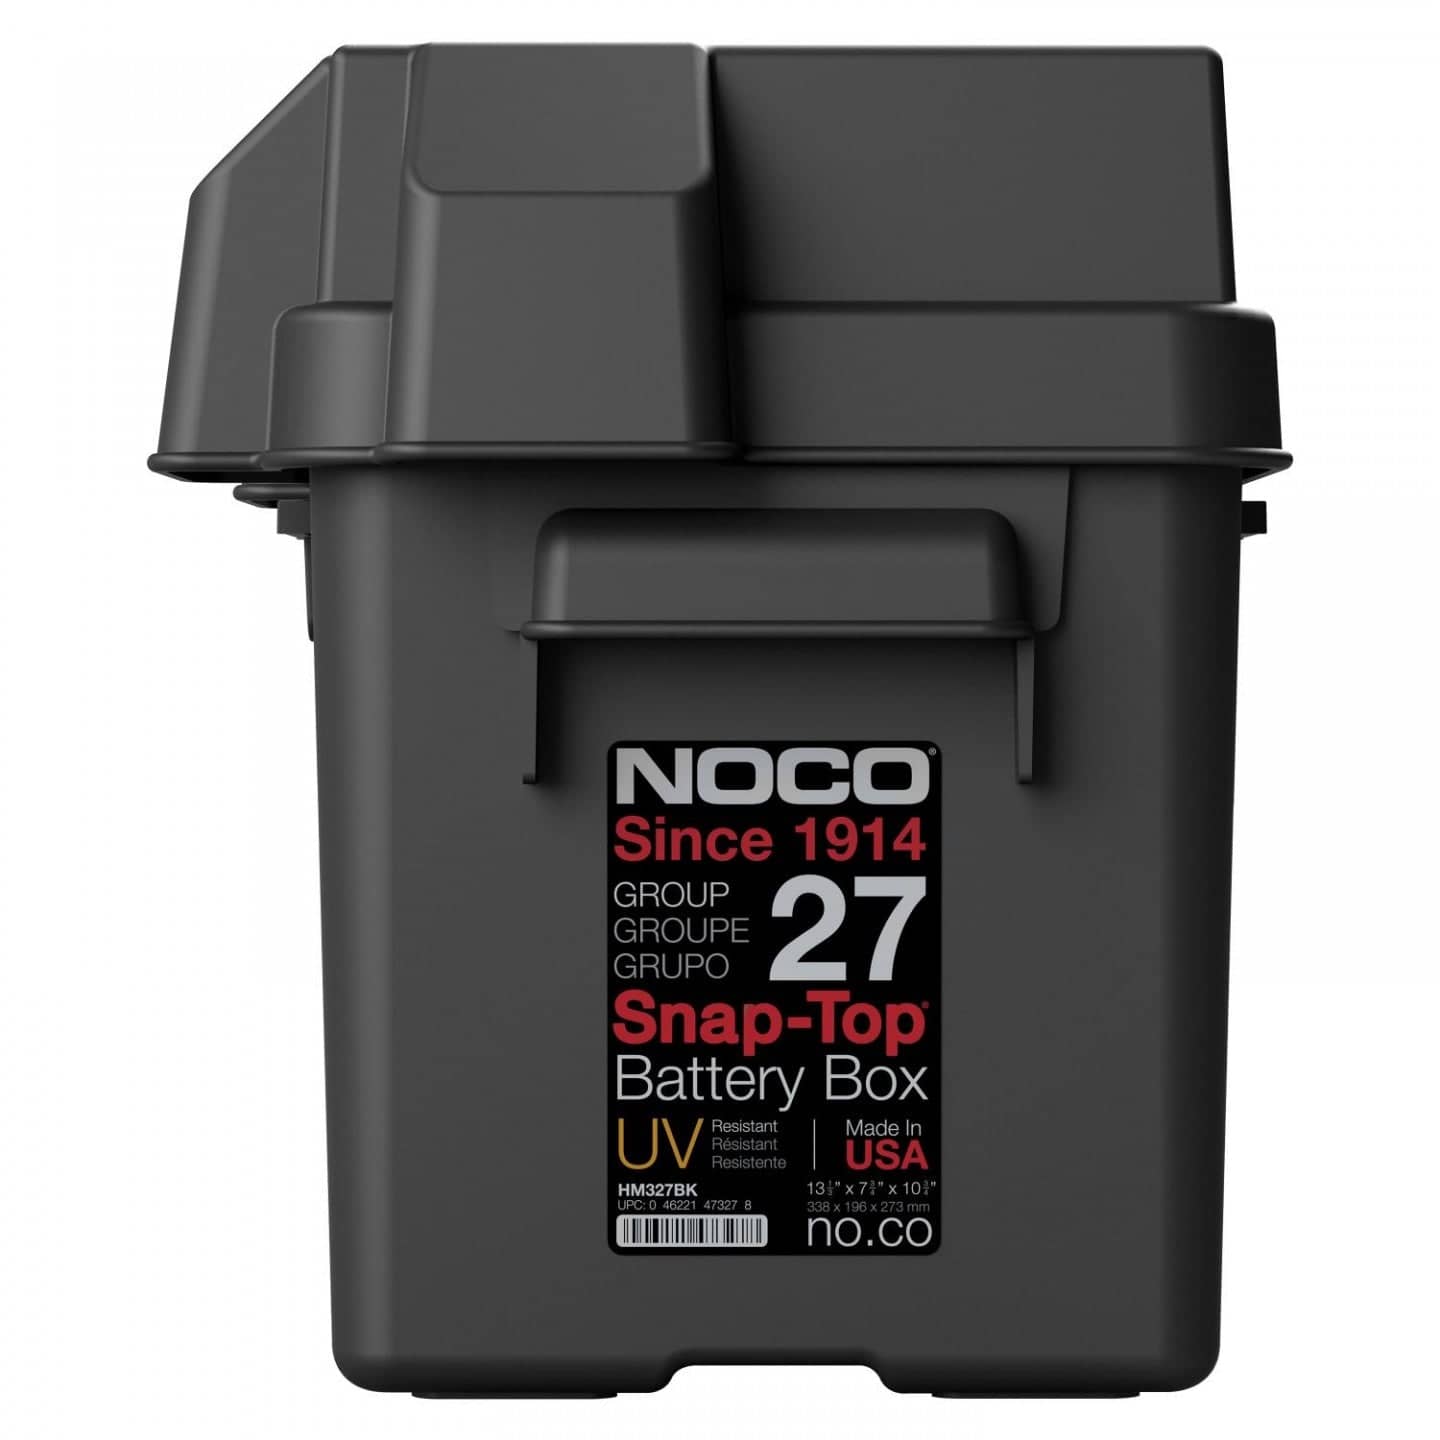 Noco - Battery Box Black GRP 27 Snap Top   HM327BKS